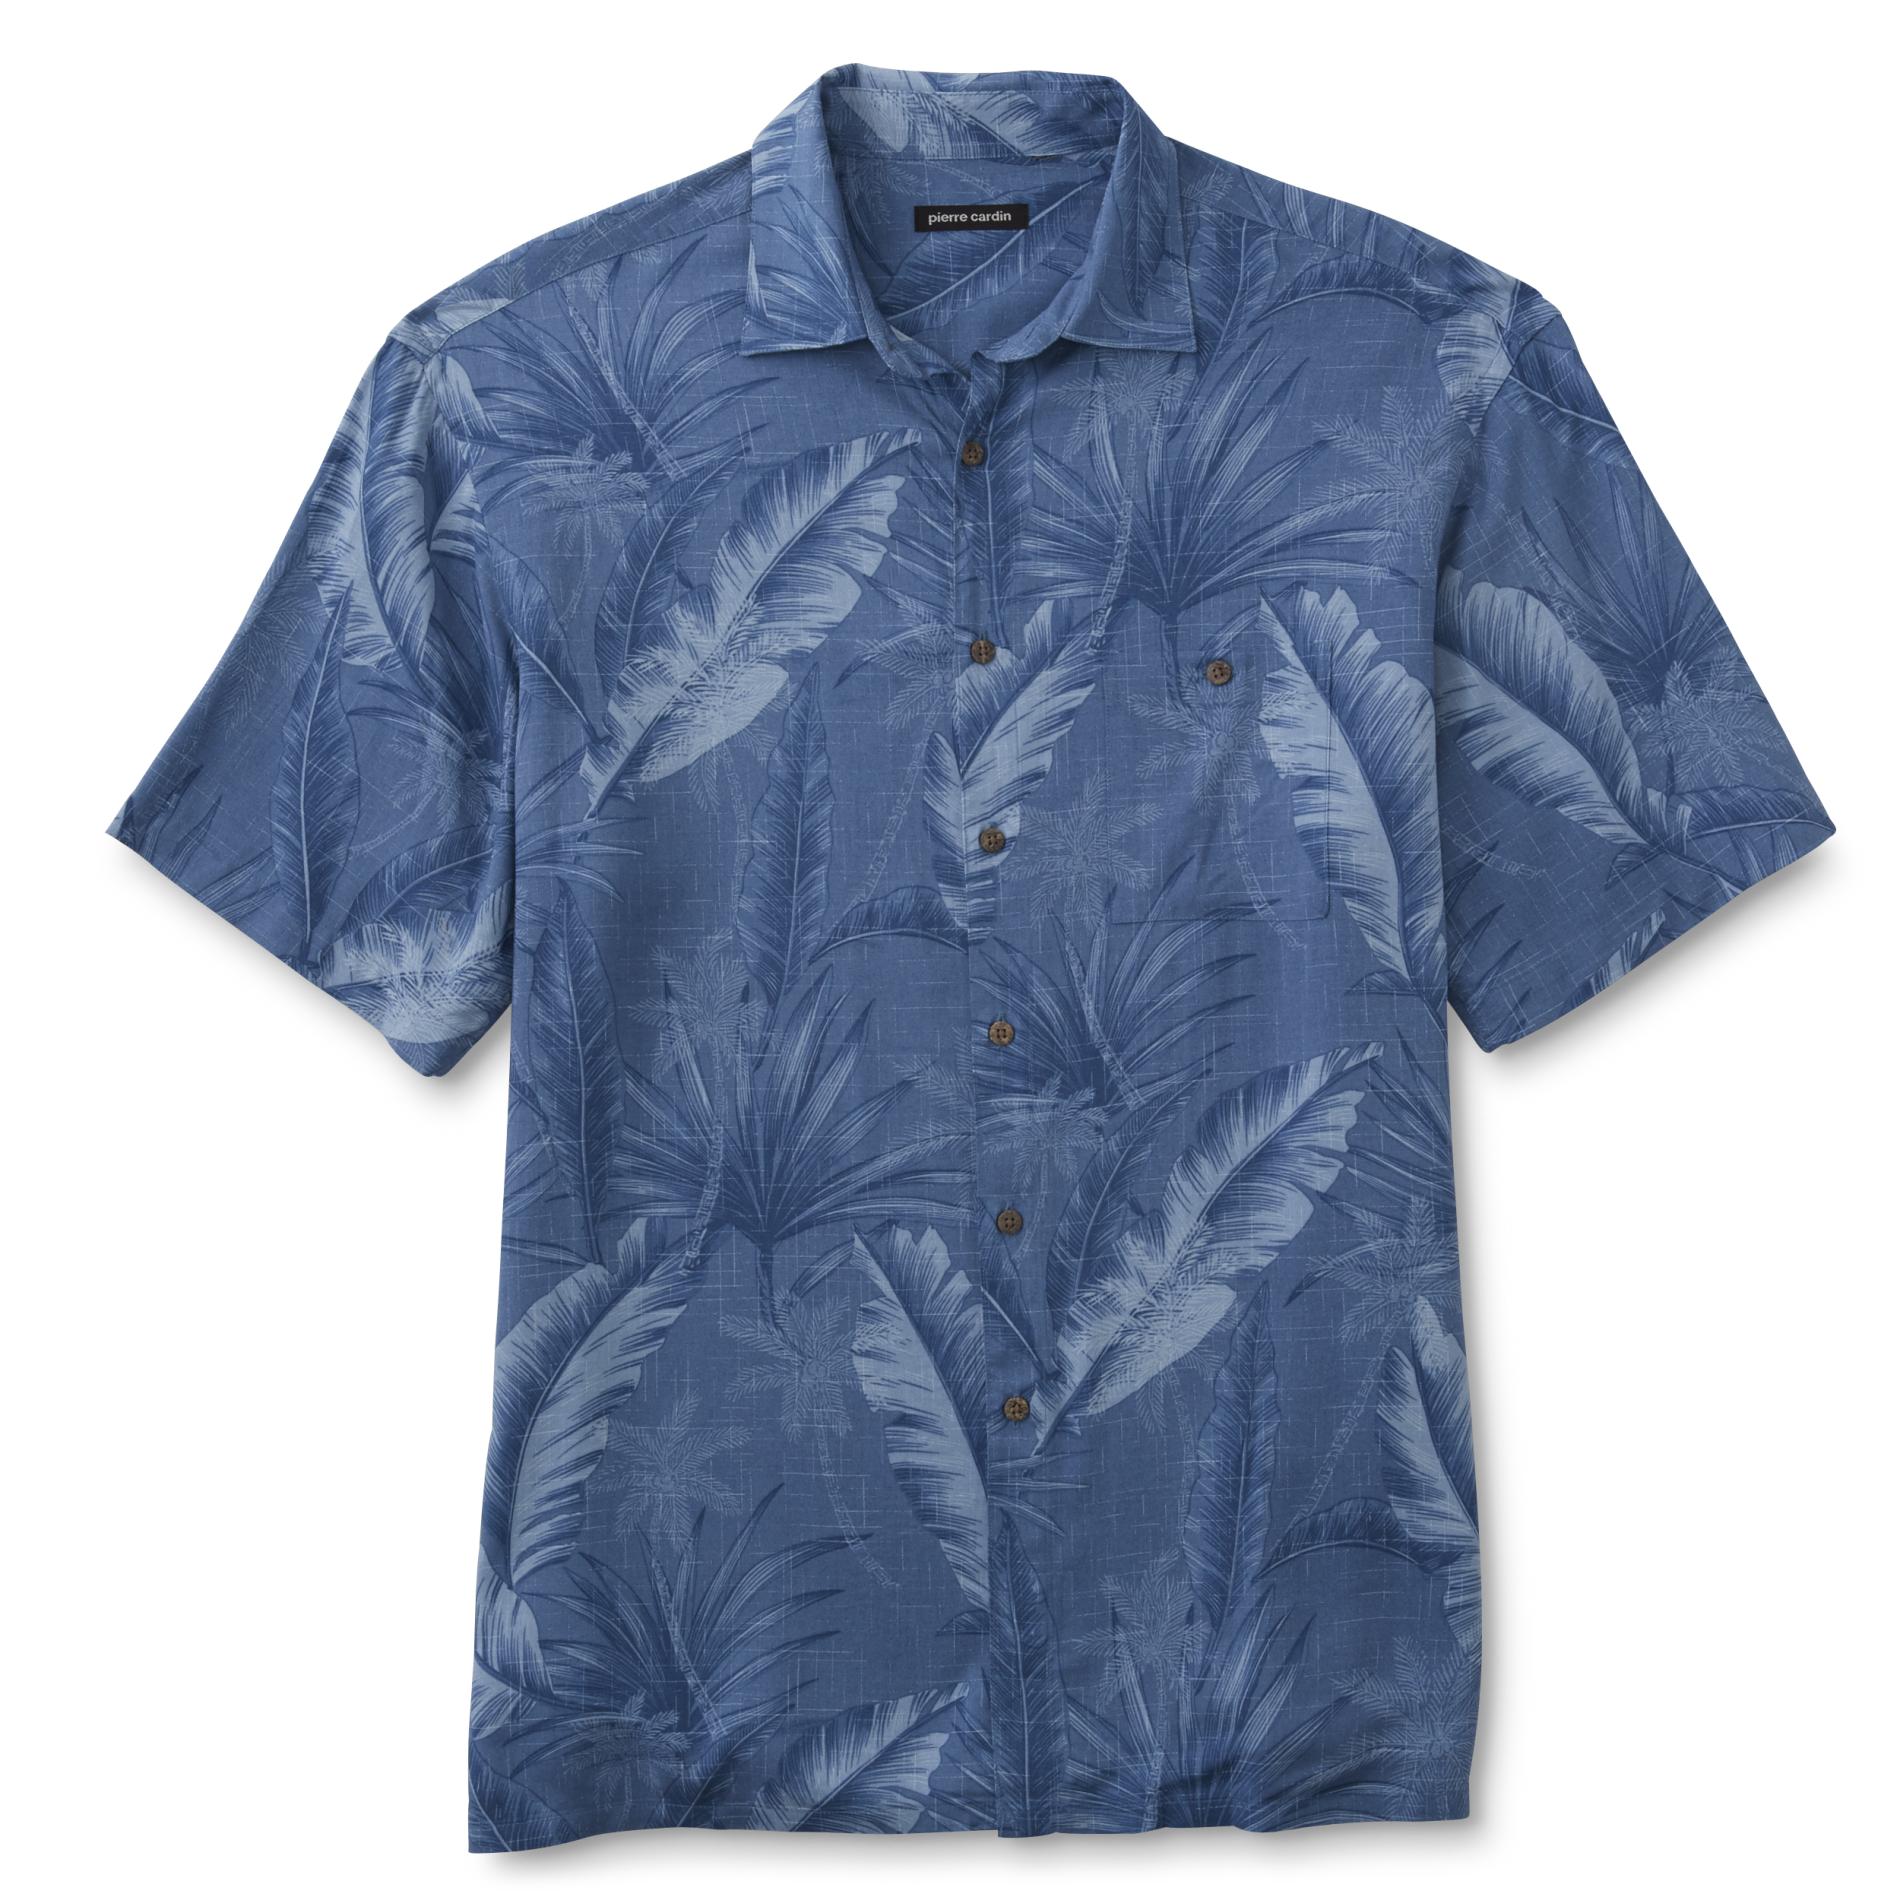 Pierre Cardin Men's Sport Shirt - Tropical